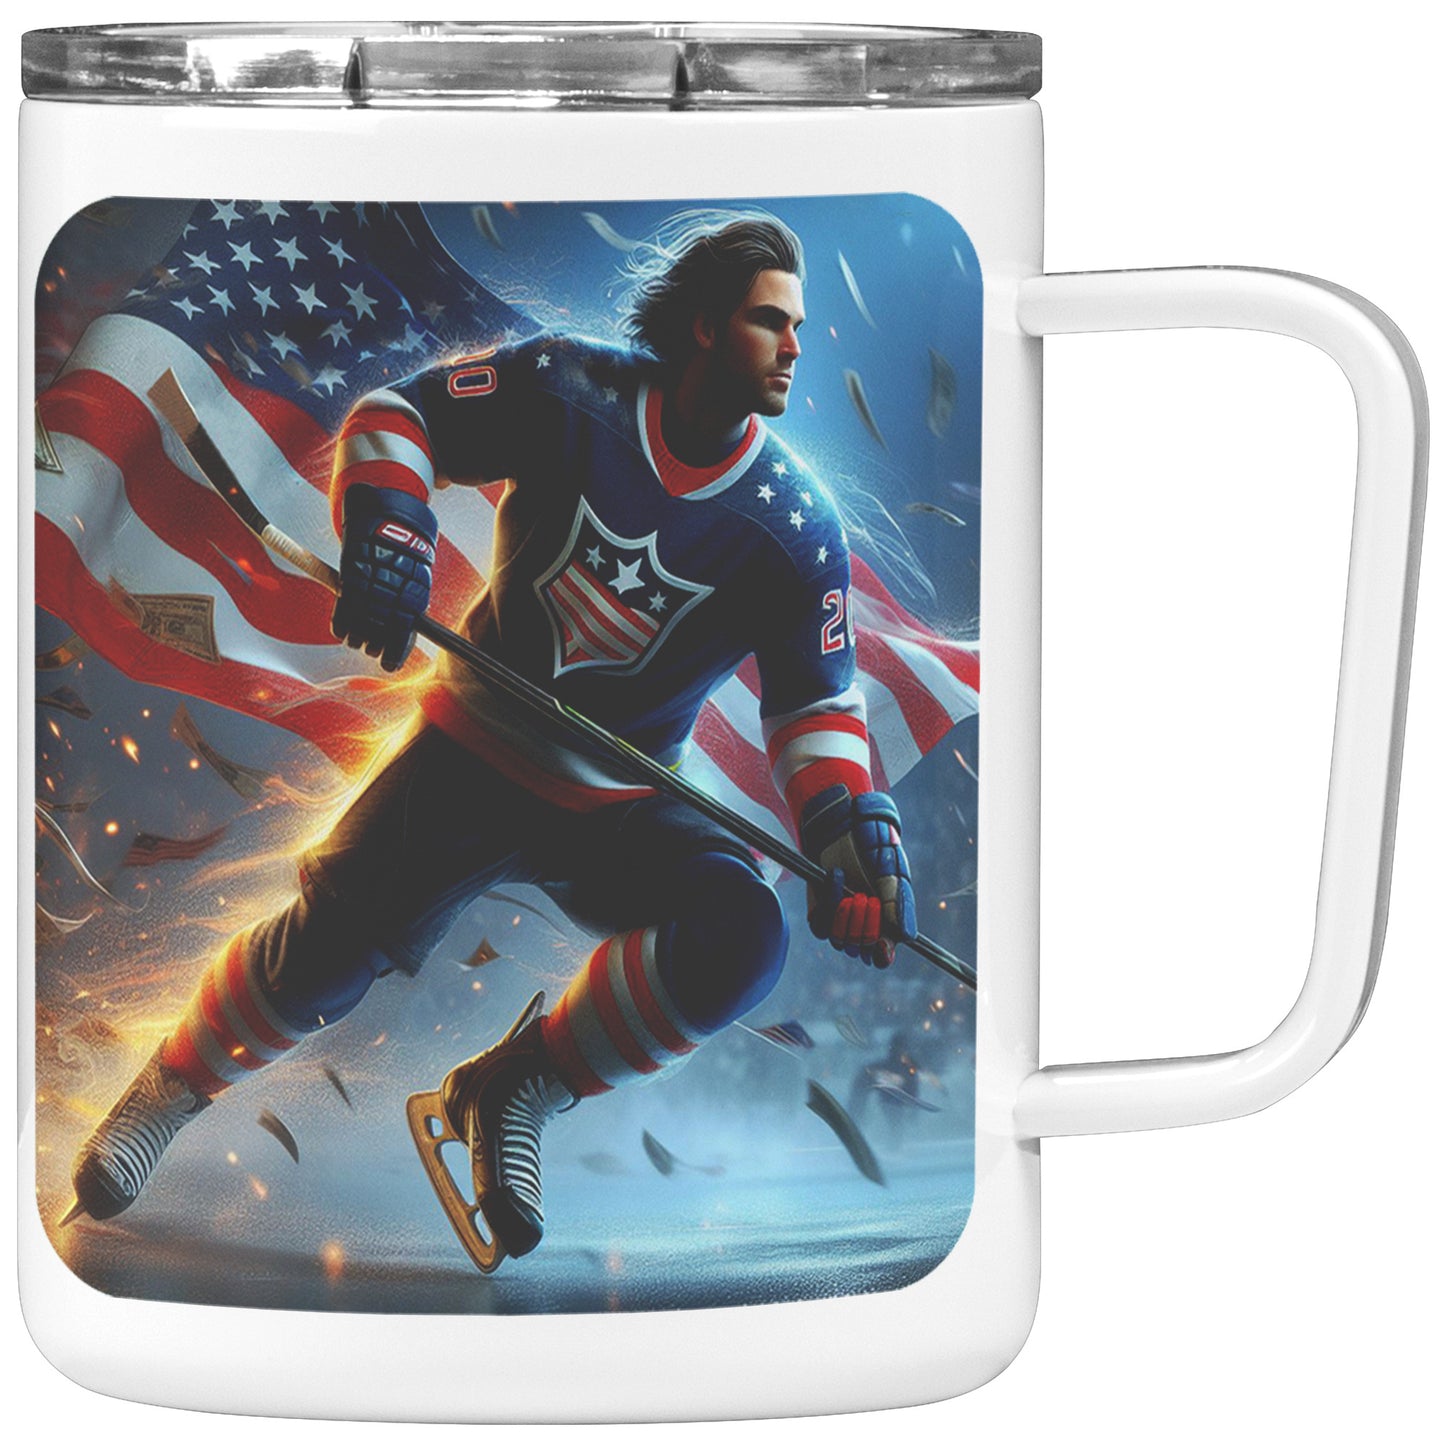 Man Ice Hockey Player - Coffee Mug #31